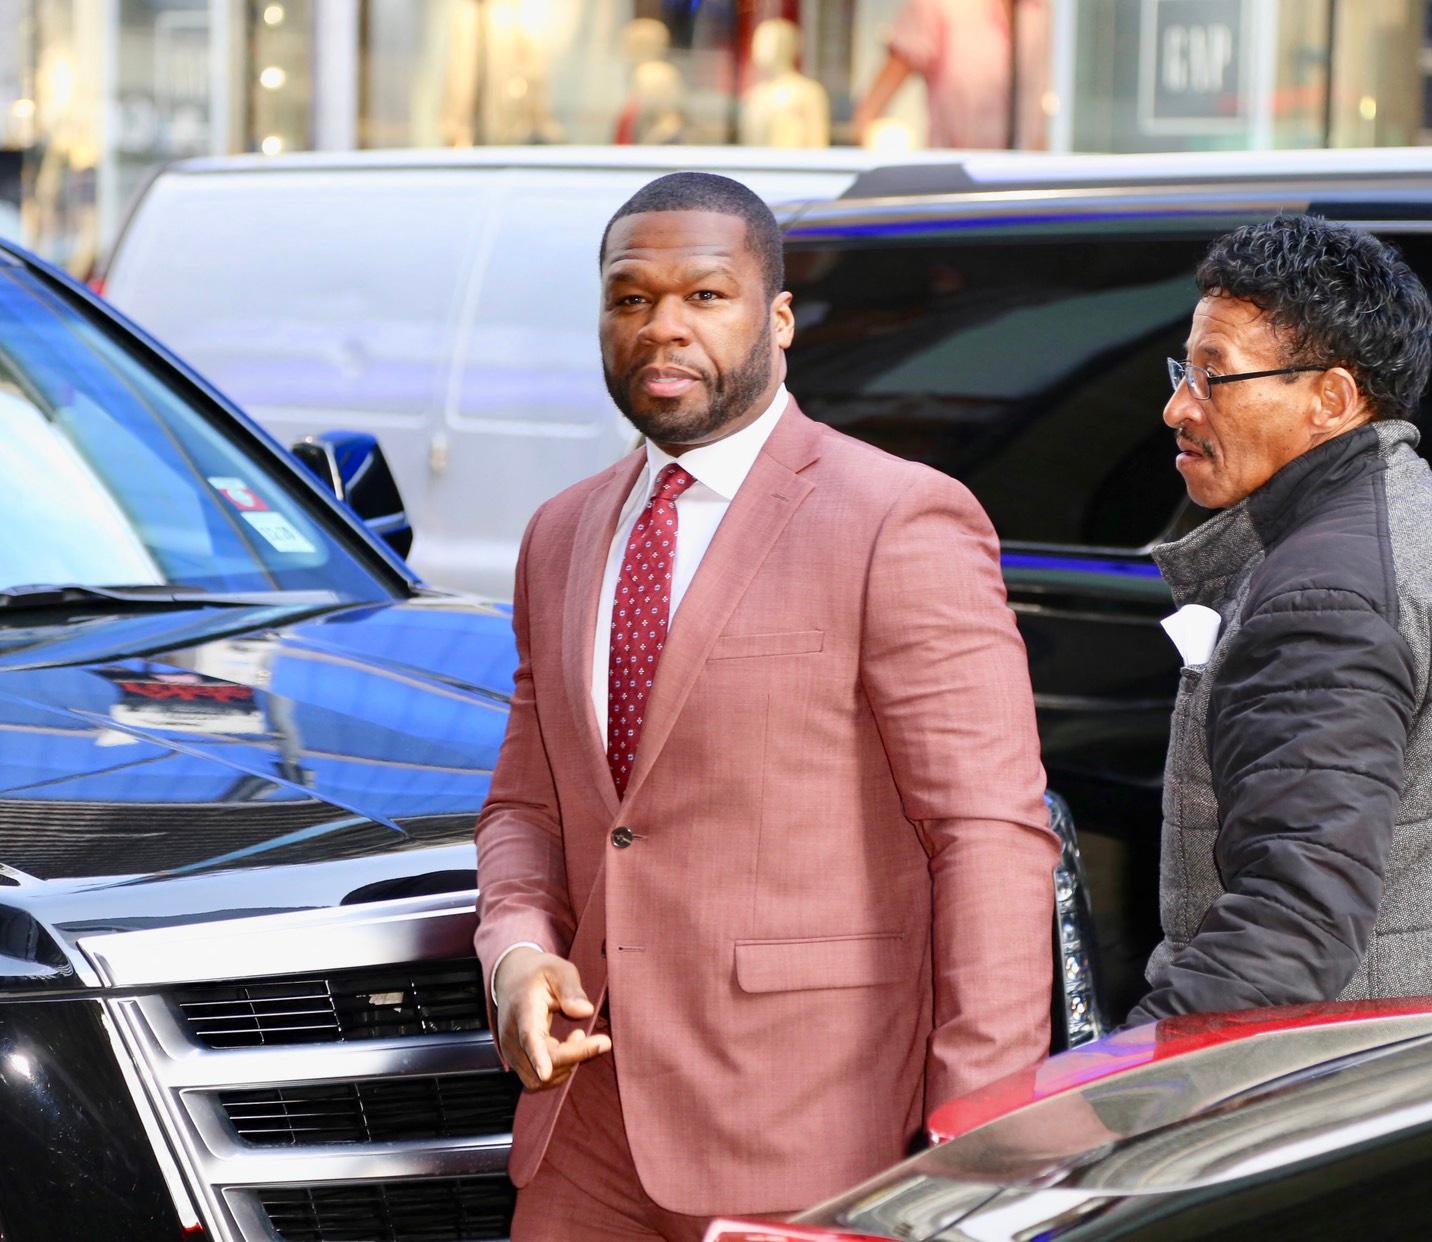 Curtis James Jackson III aka 50 Cent at Good Morning America.